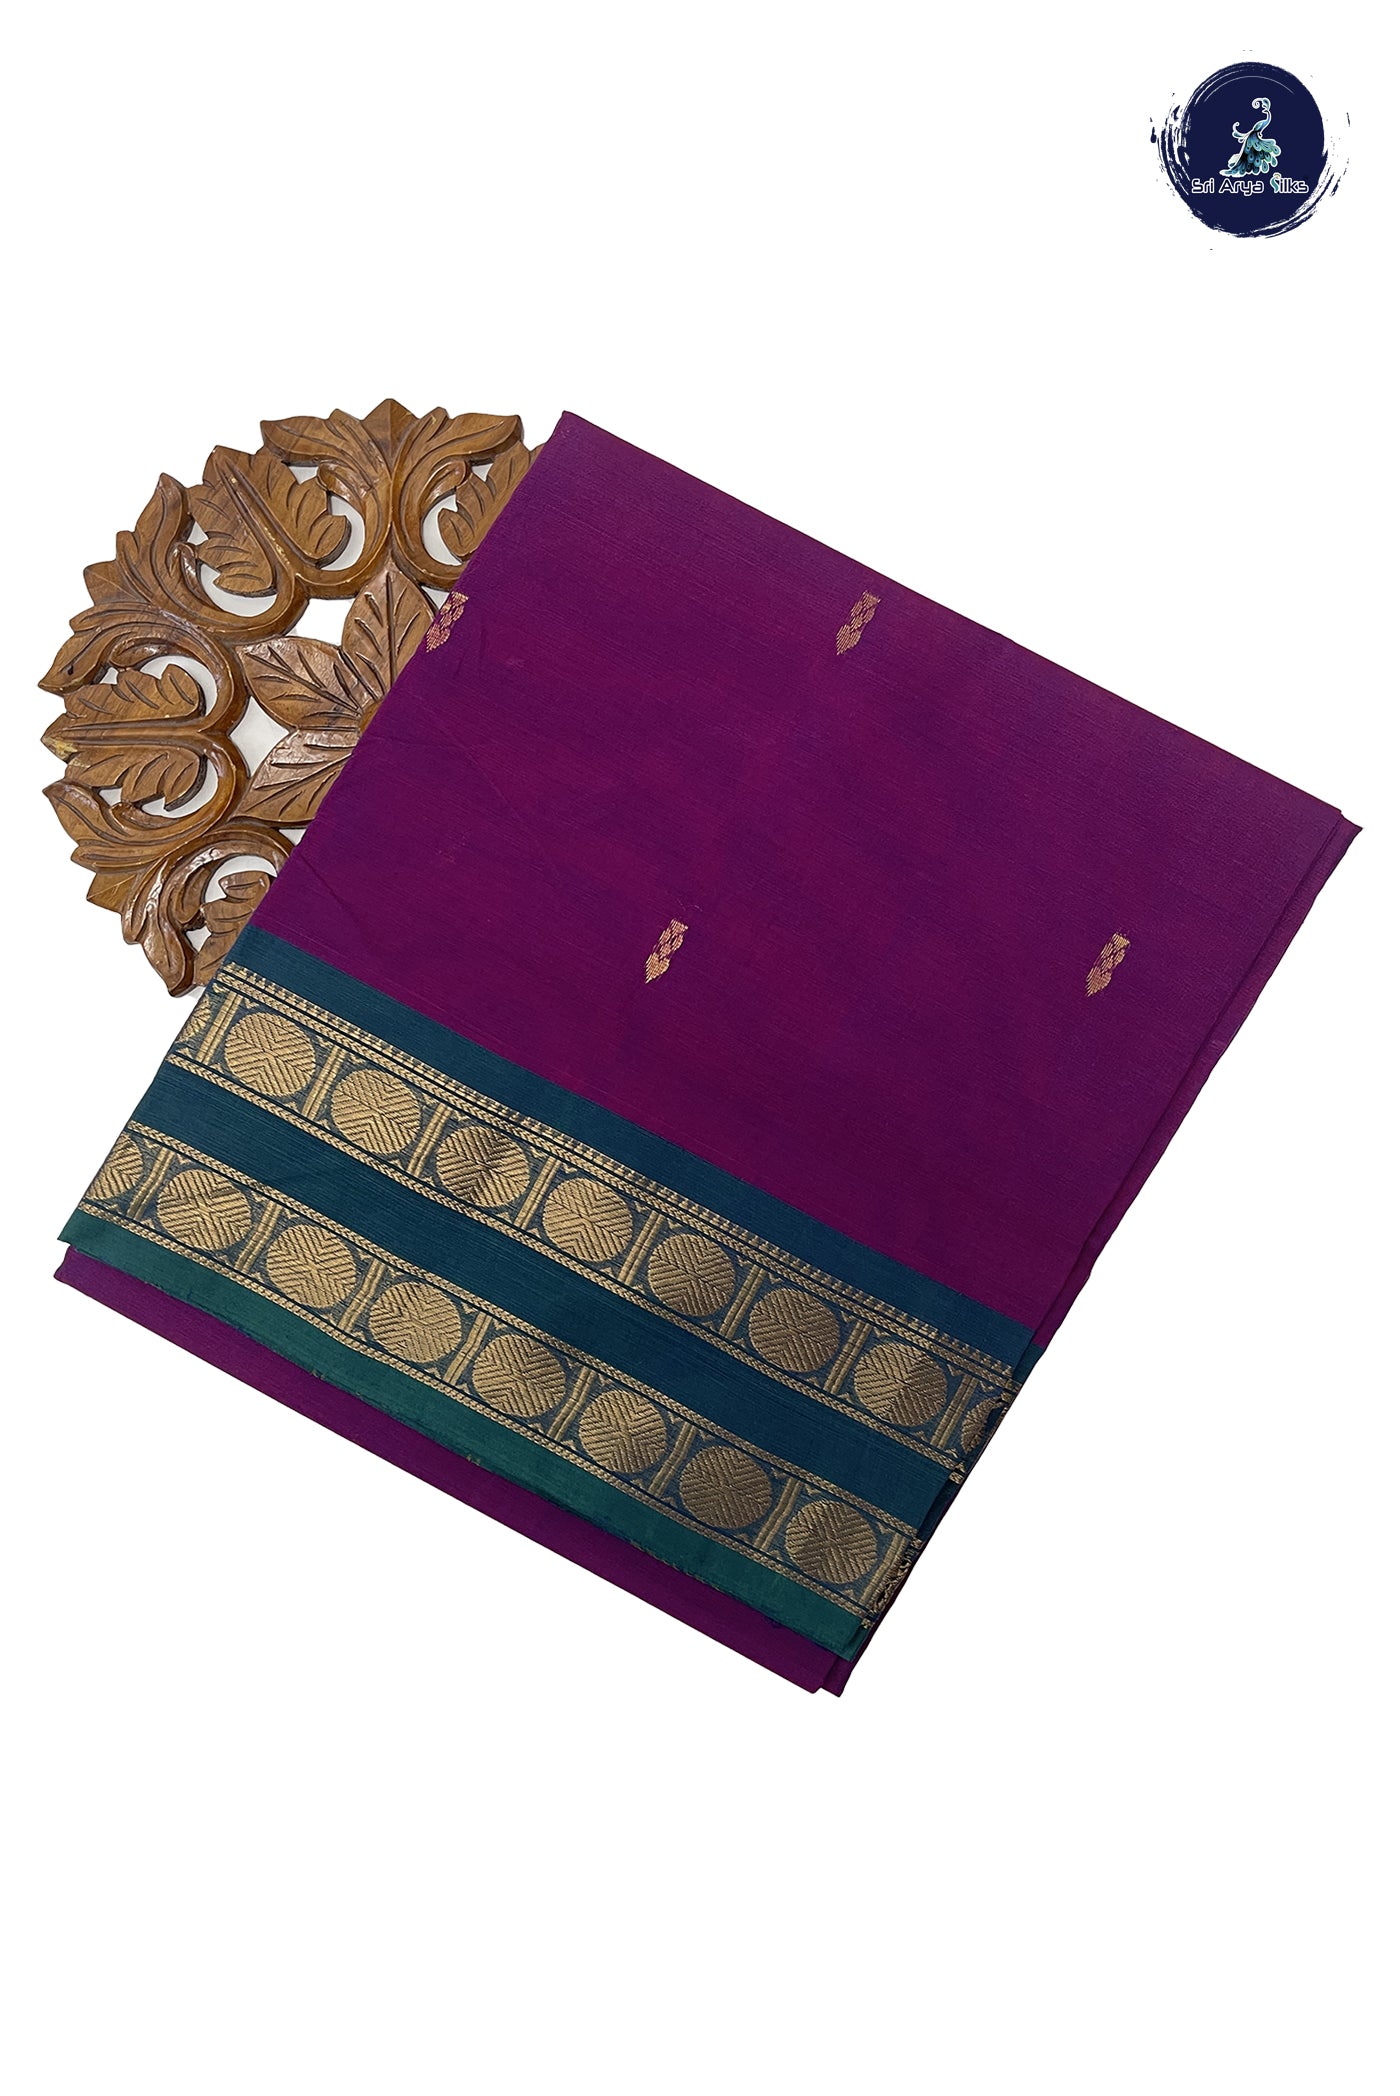 Dual Tone Purple Cotton Saree With Zari Buttas Pattern